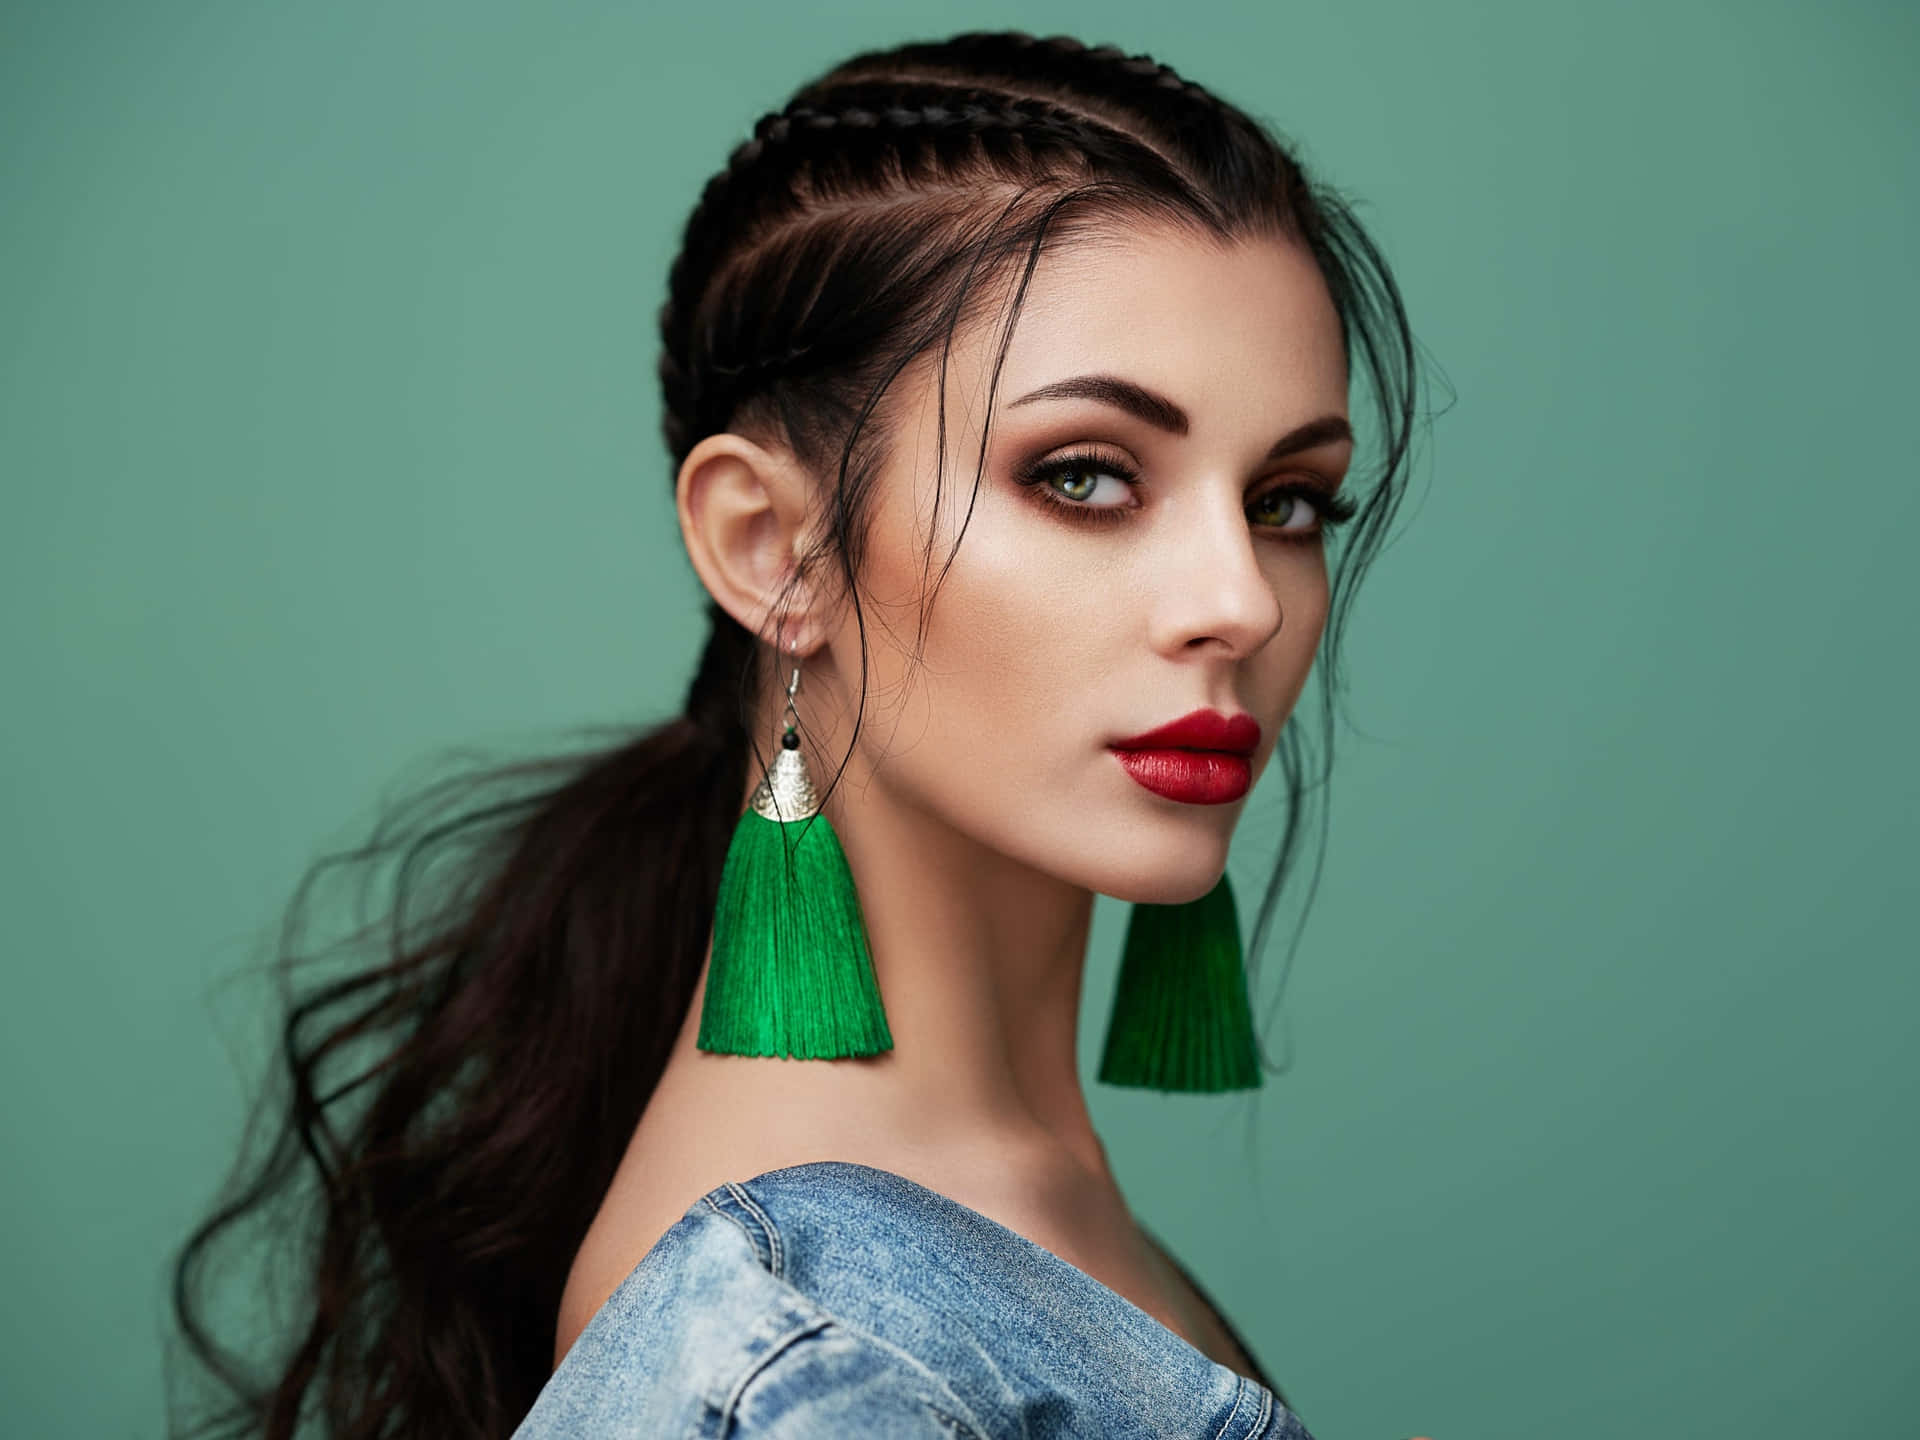 Beautiful Woman With Green Tassel Earrings Posing On Green Background